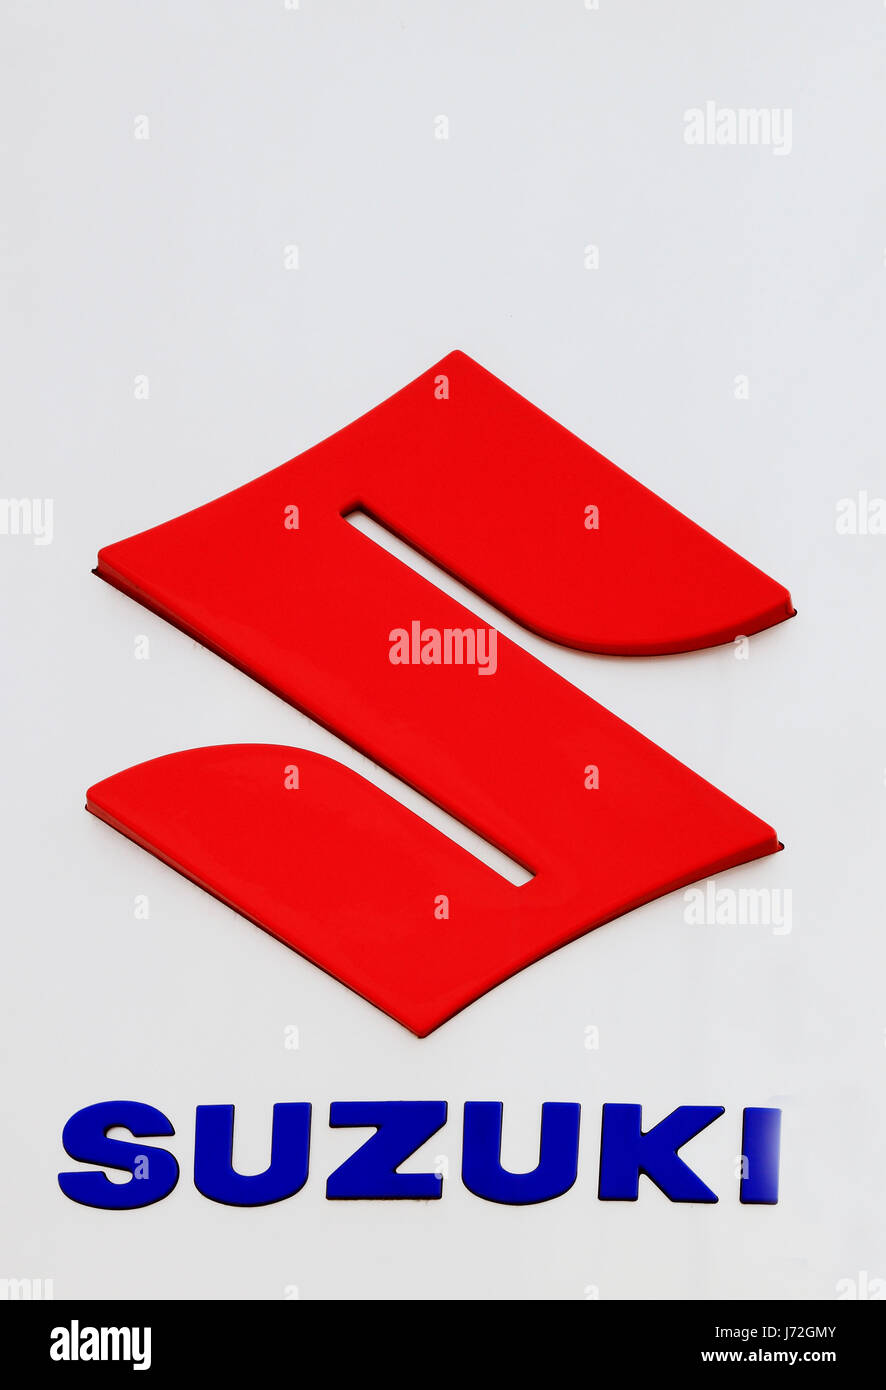 Suzuki sign, logo, motorcar sales, dealers, dealership, England, UK Stock Photo